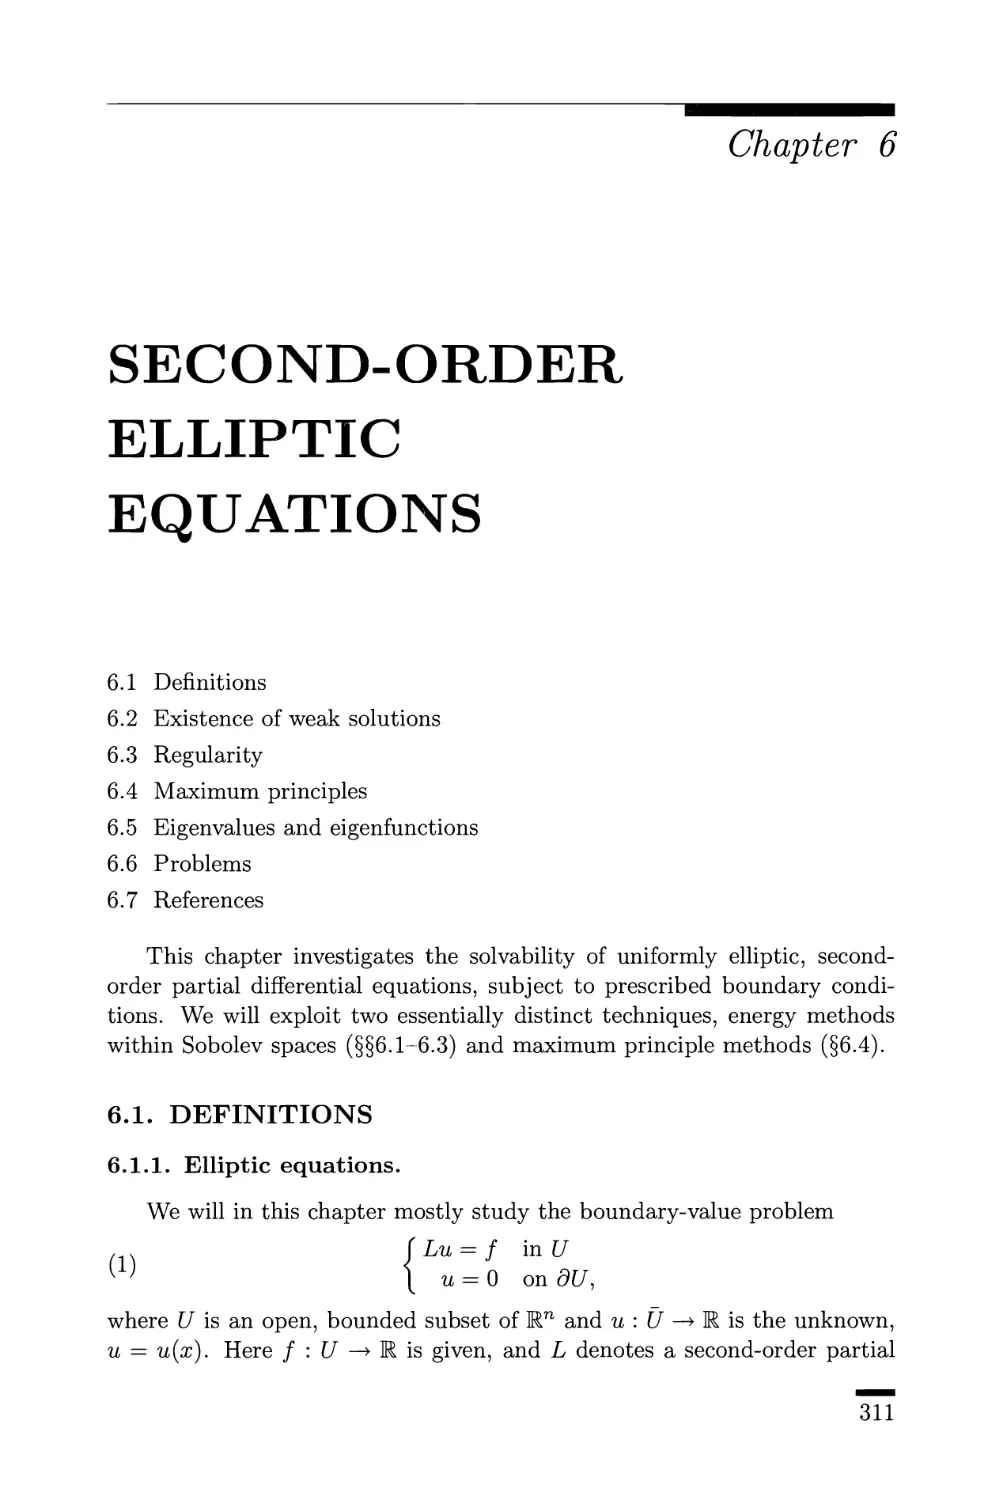 6. Second-Order Elliptic Equations